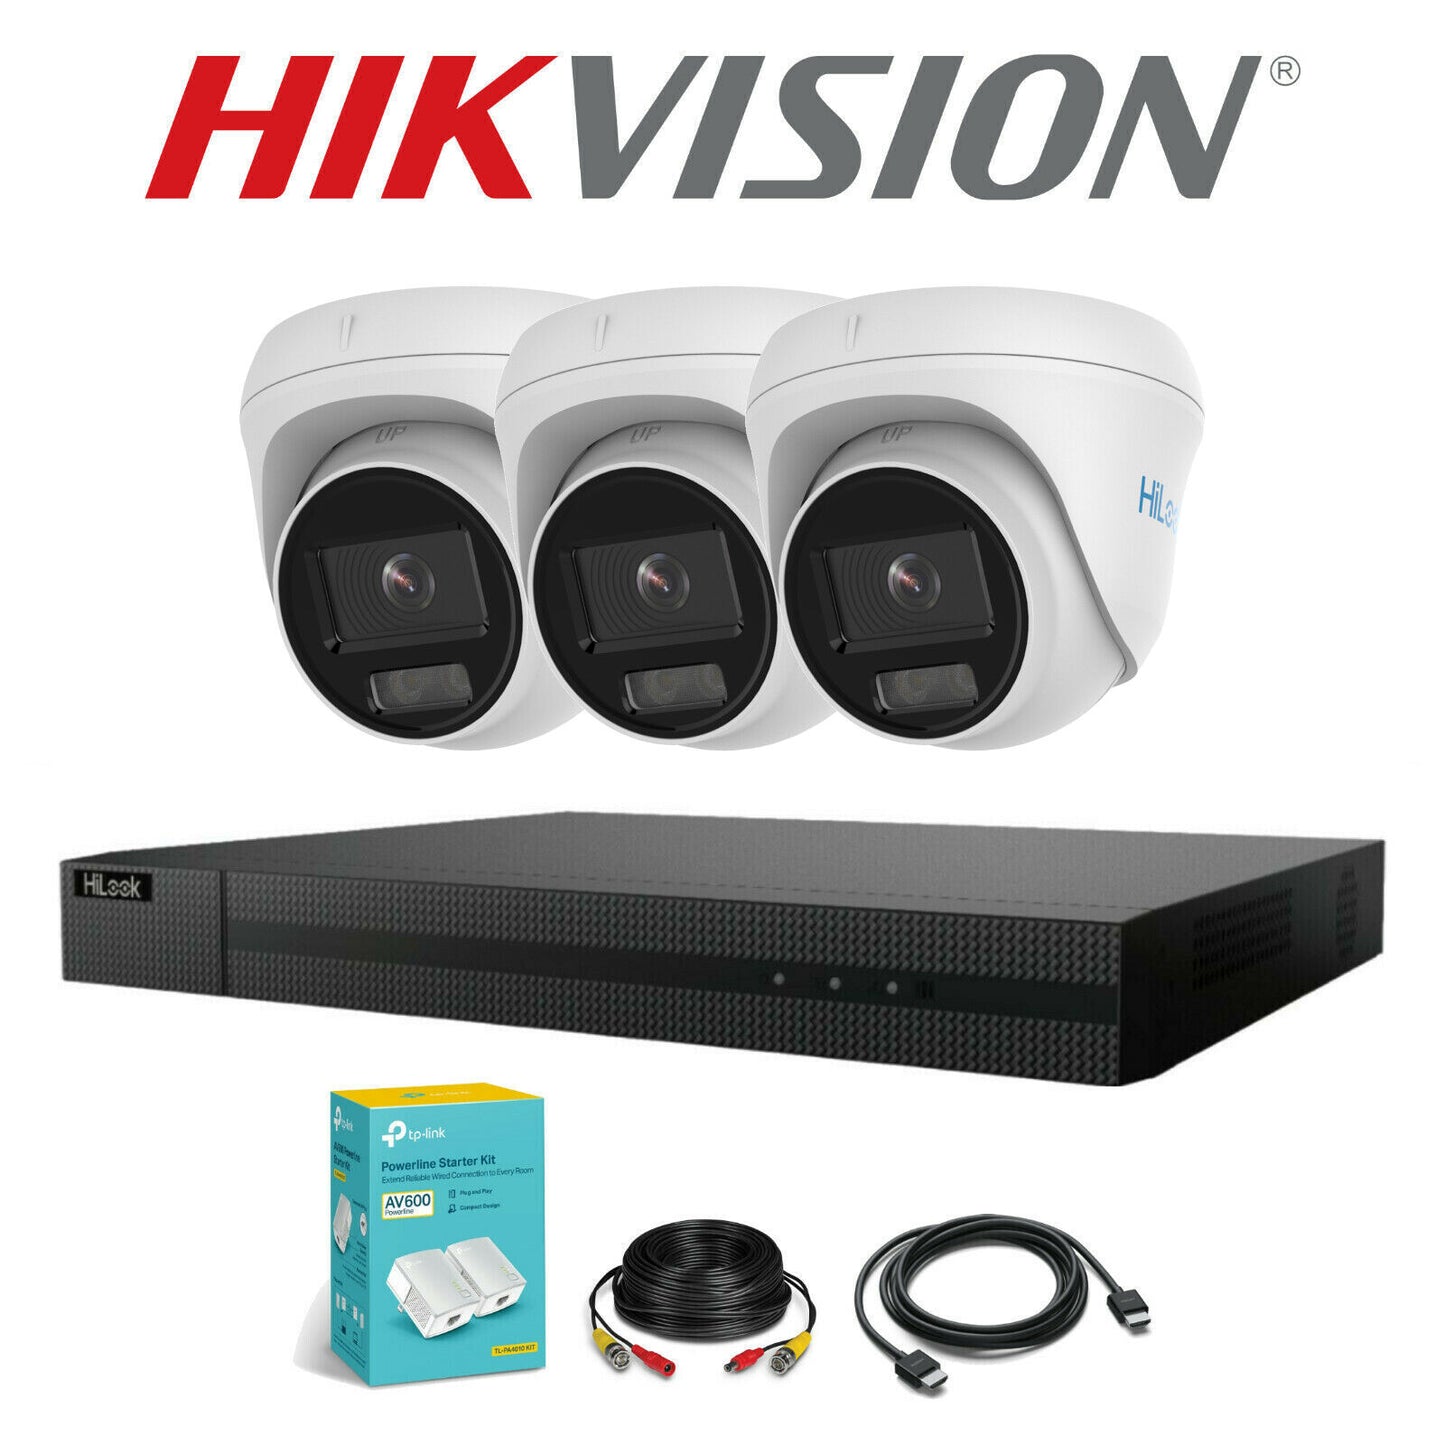 HIKVISION COLORVU POE CCTV SYSTEM IP UHD 8MP NVR 4K 5MP 24/7 COLORVU CAMERA KIT 4CH NVR 3x Cameras 6TB HDD